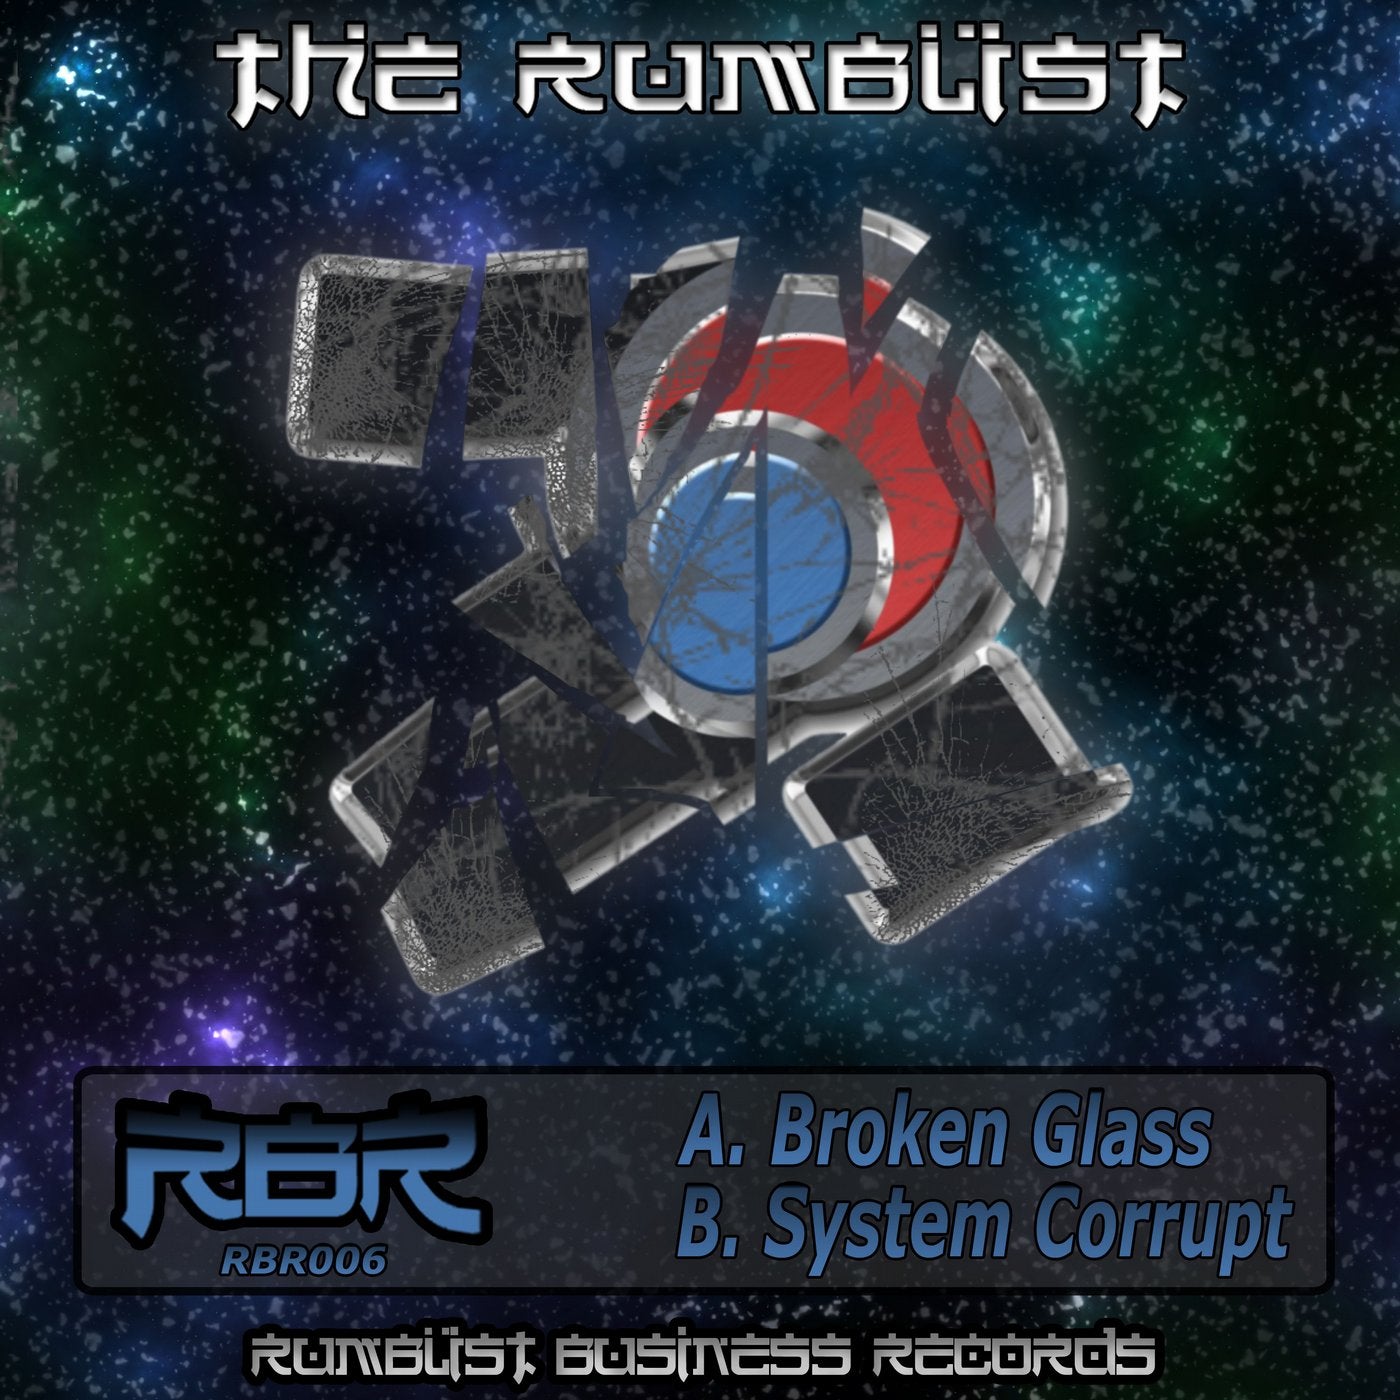 RBR006 The Rumblist - Broken Glass/System Corrupt